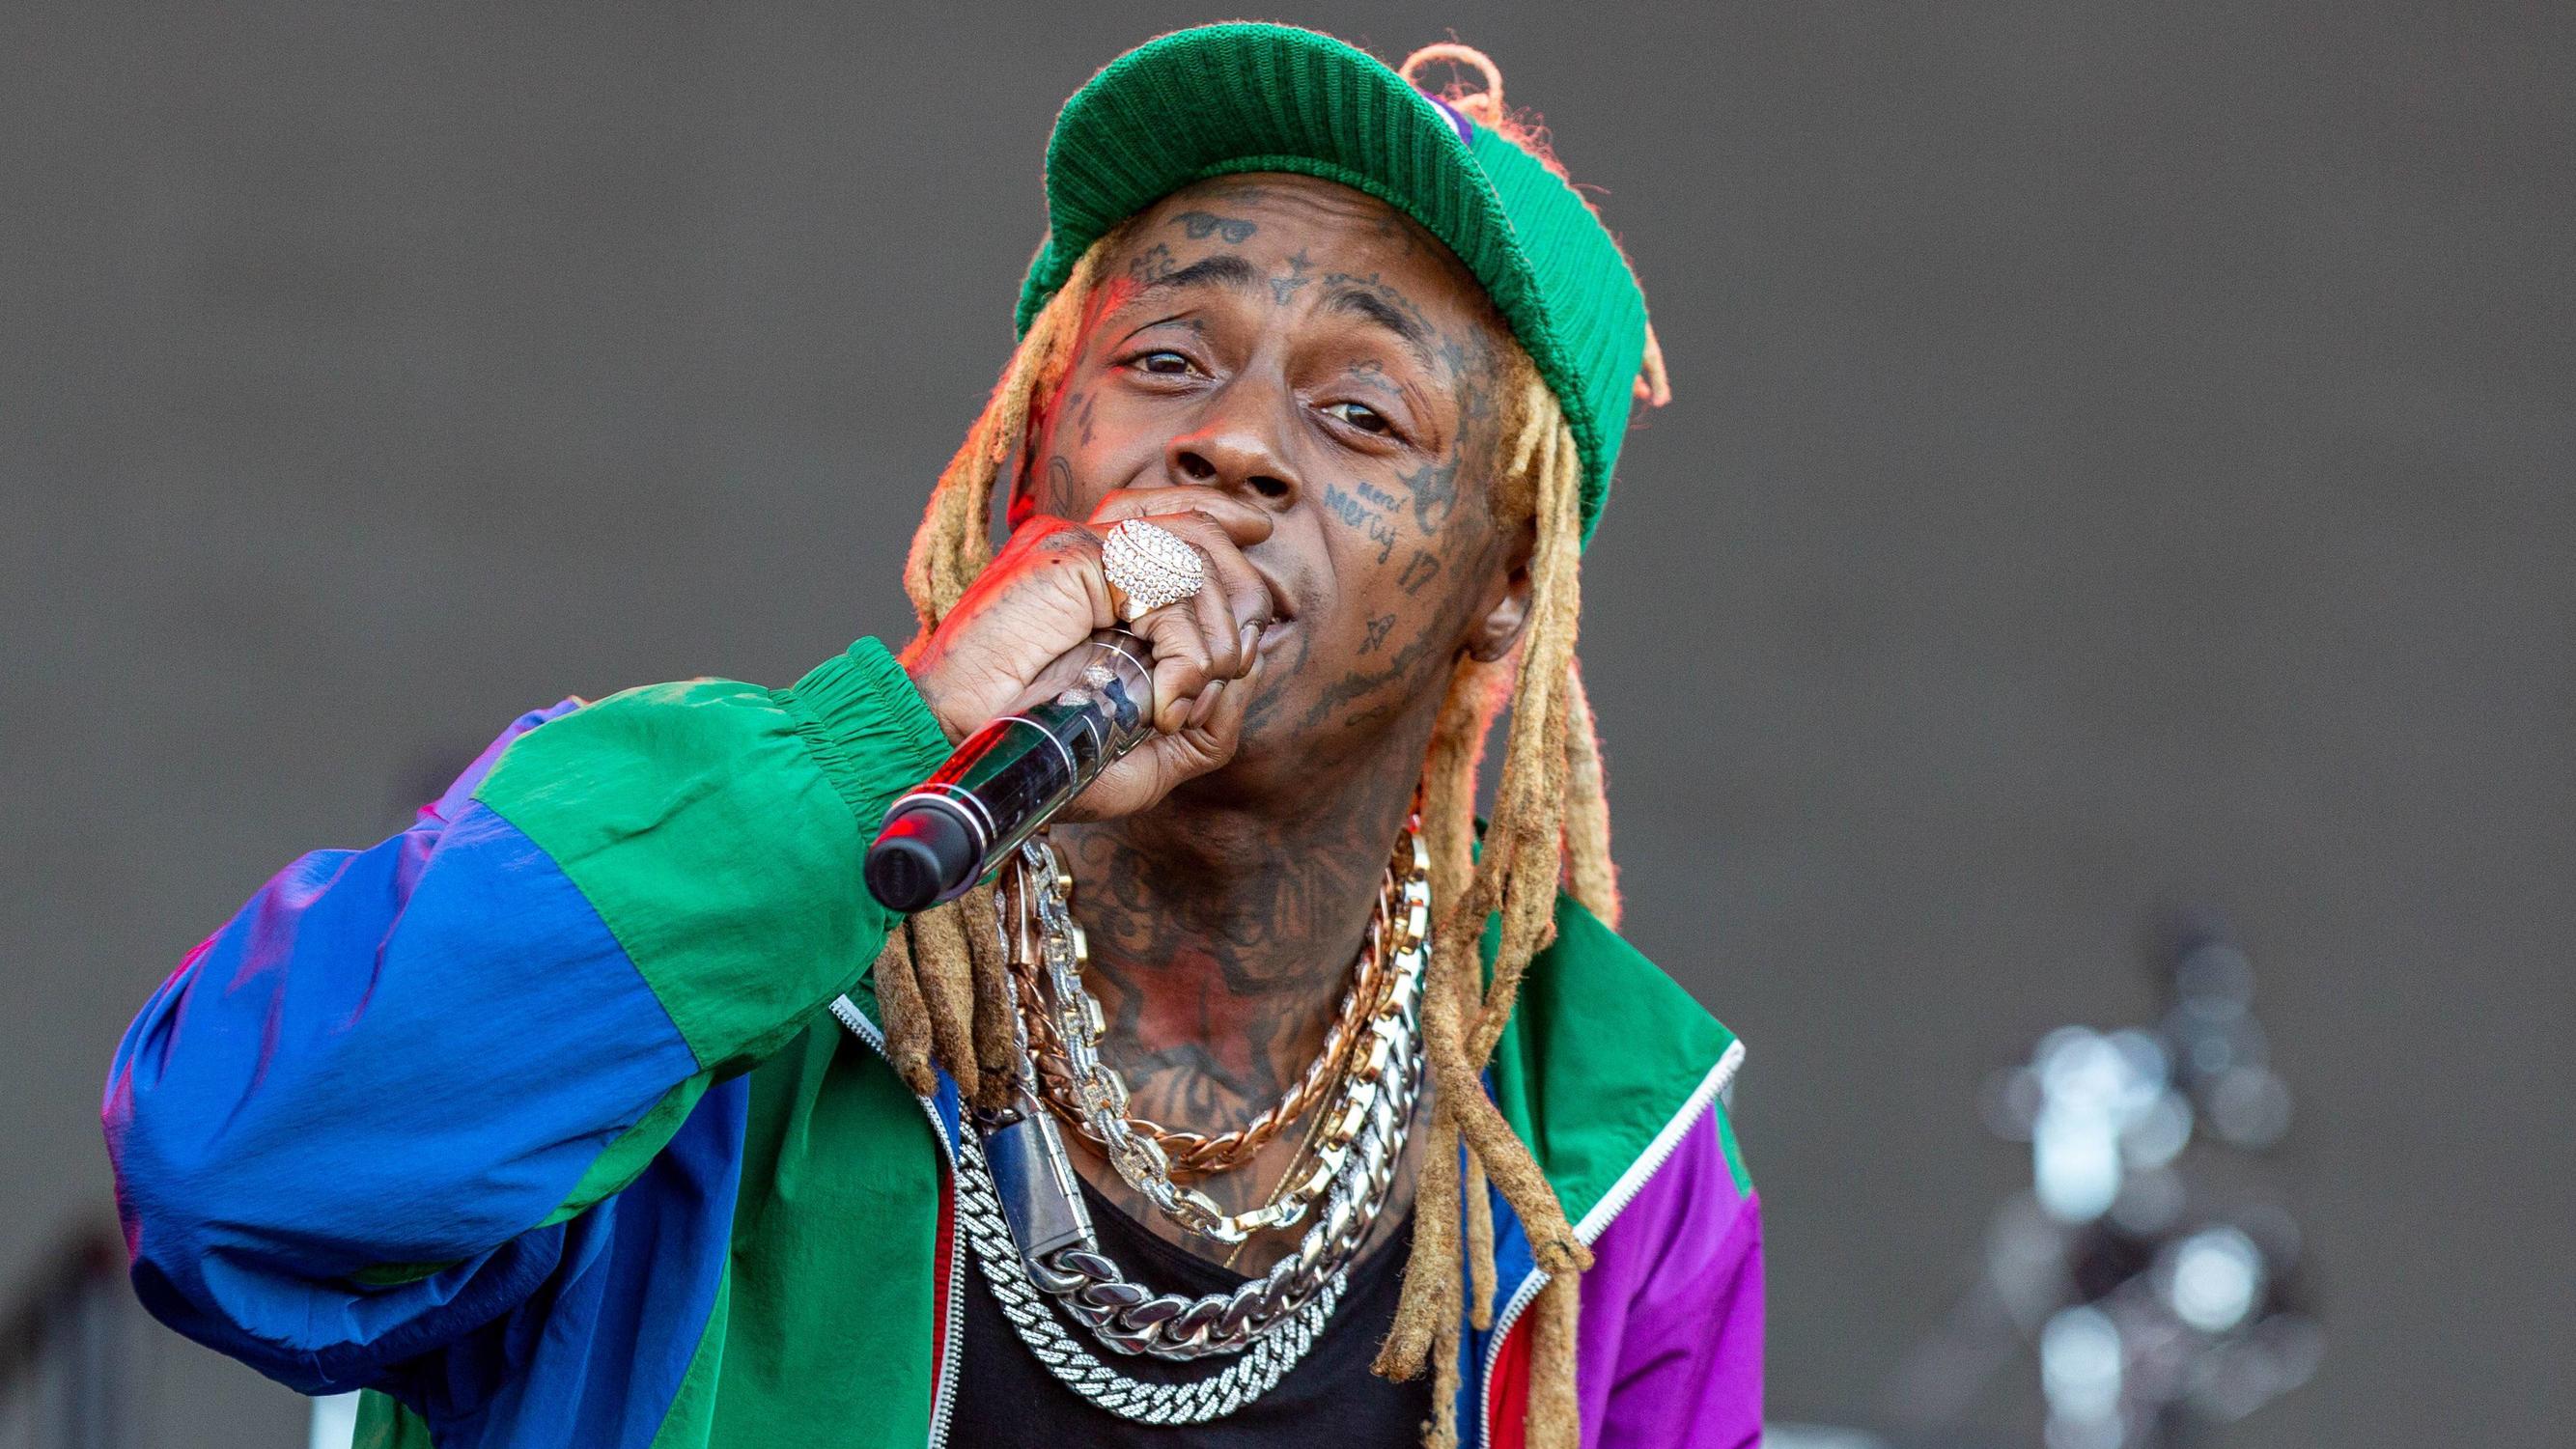 Lil Wayne during Outside Lands Music Festival at Golden Gate Park in San Francisco, California, United States - 9 August 2019 PUBLICATIONxINxGERxSUIxAUTxONLY - ZUMAr152 20190809_zaa_r152_054 Copyright: xDd1x